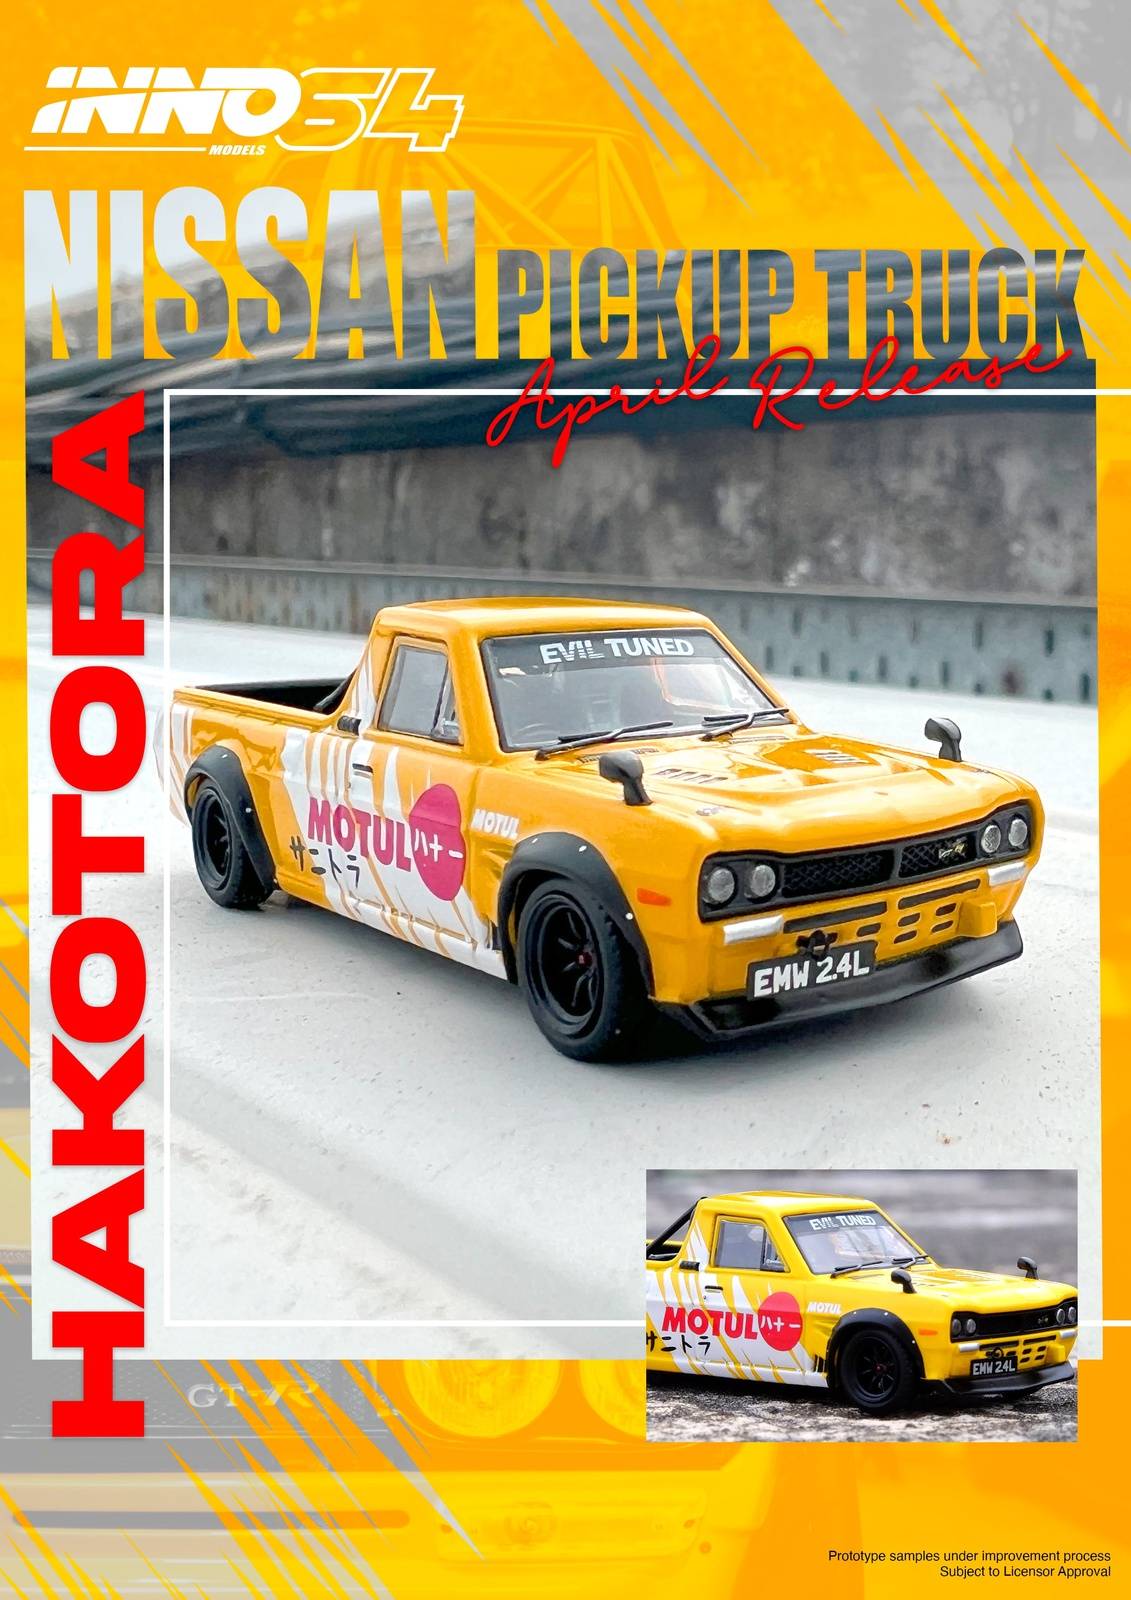 PRE-ORDER INNO64 1:64 Nissan Hakotora Pick Up Truck "MOTUL" Livery